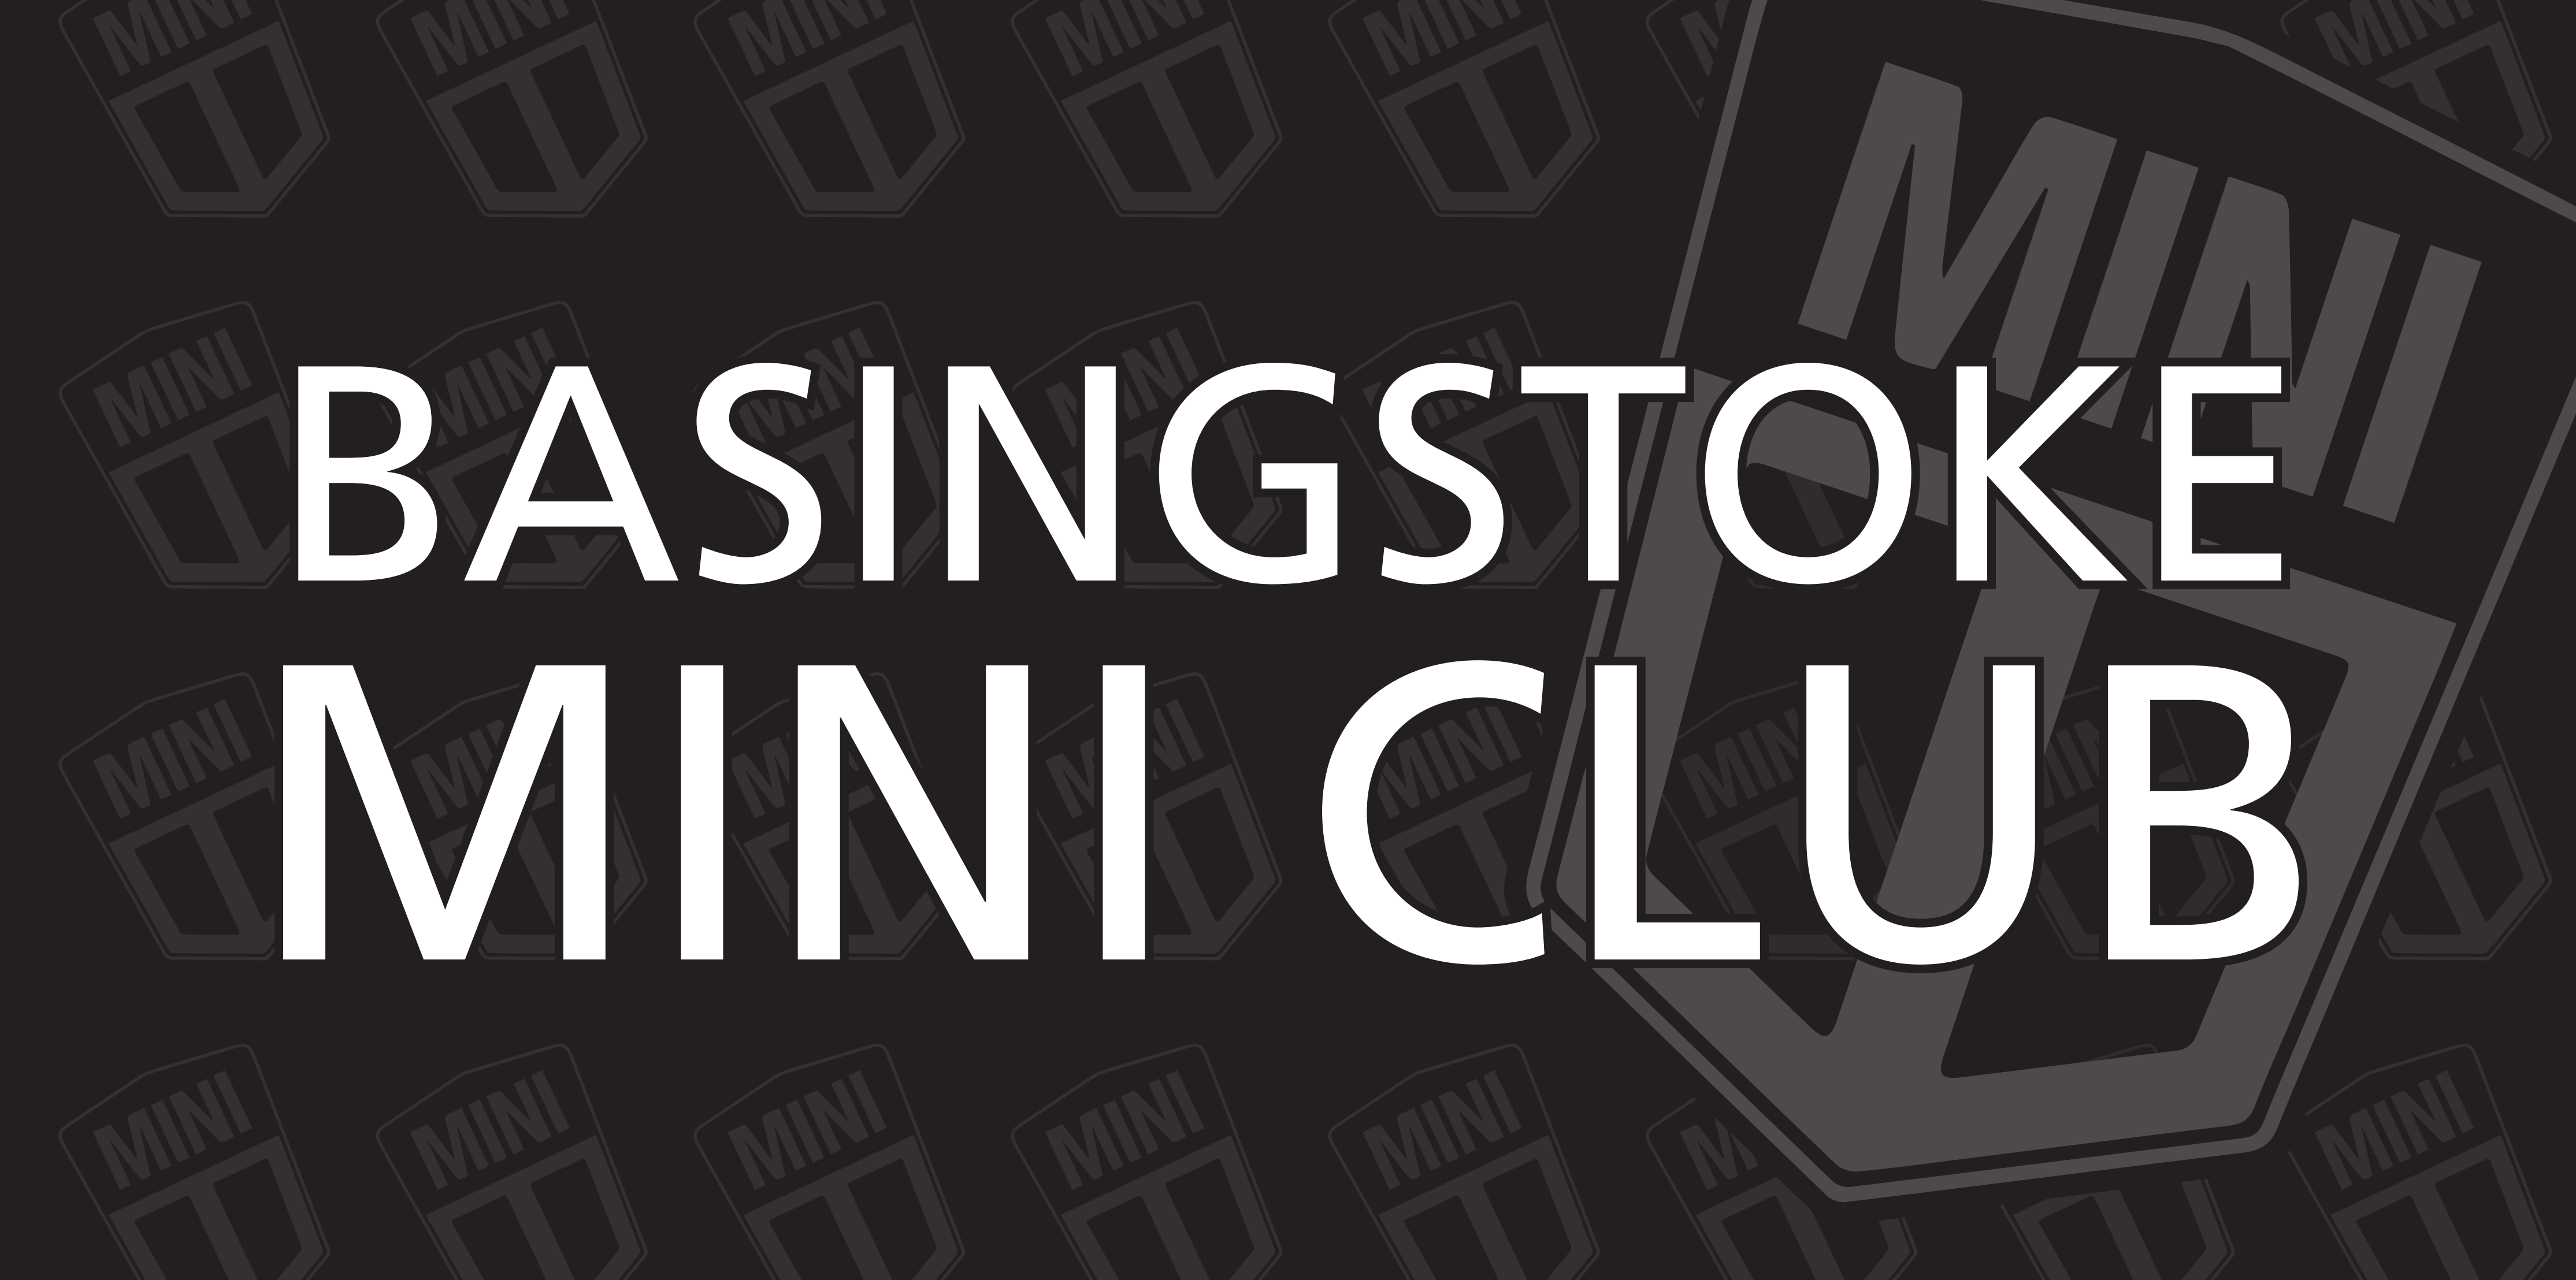 Basingstoke Classic Mini Club Evoke Classics Owners Club listings